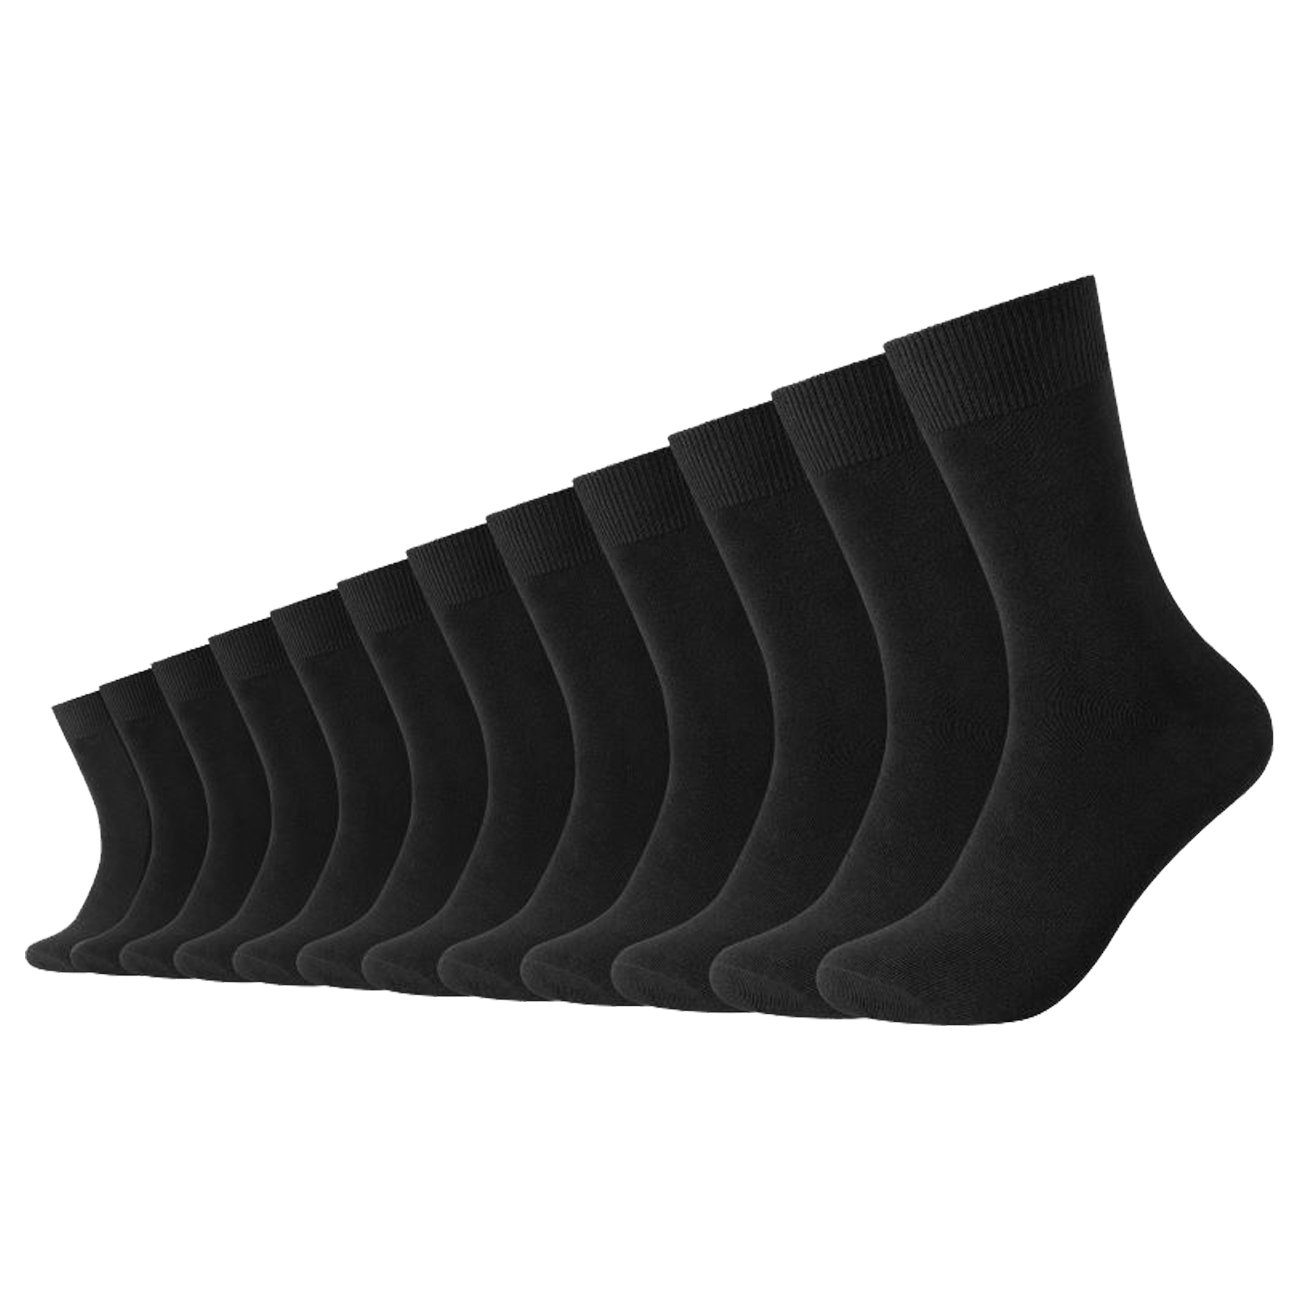 Camano Langsocken Unisex Socken Comfort pflegeleichter (9999) Baumwollmischung Crew Black Cotton aus Regularsocken (12-Paar)